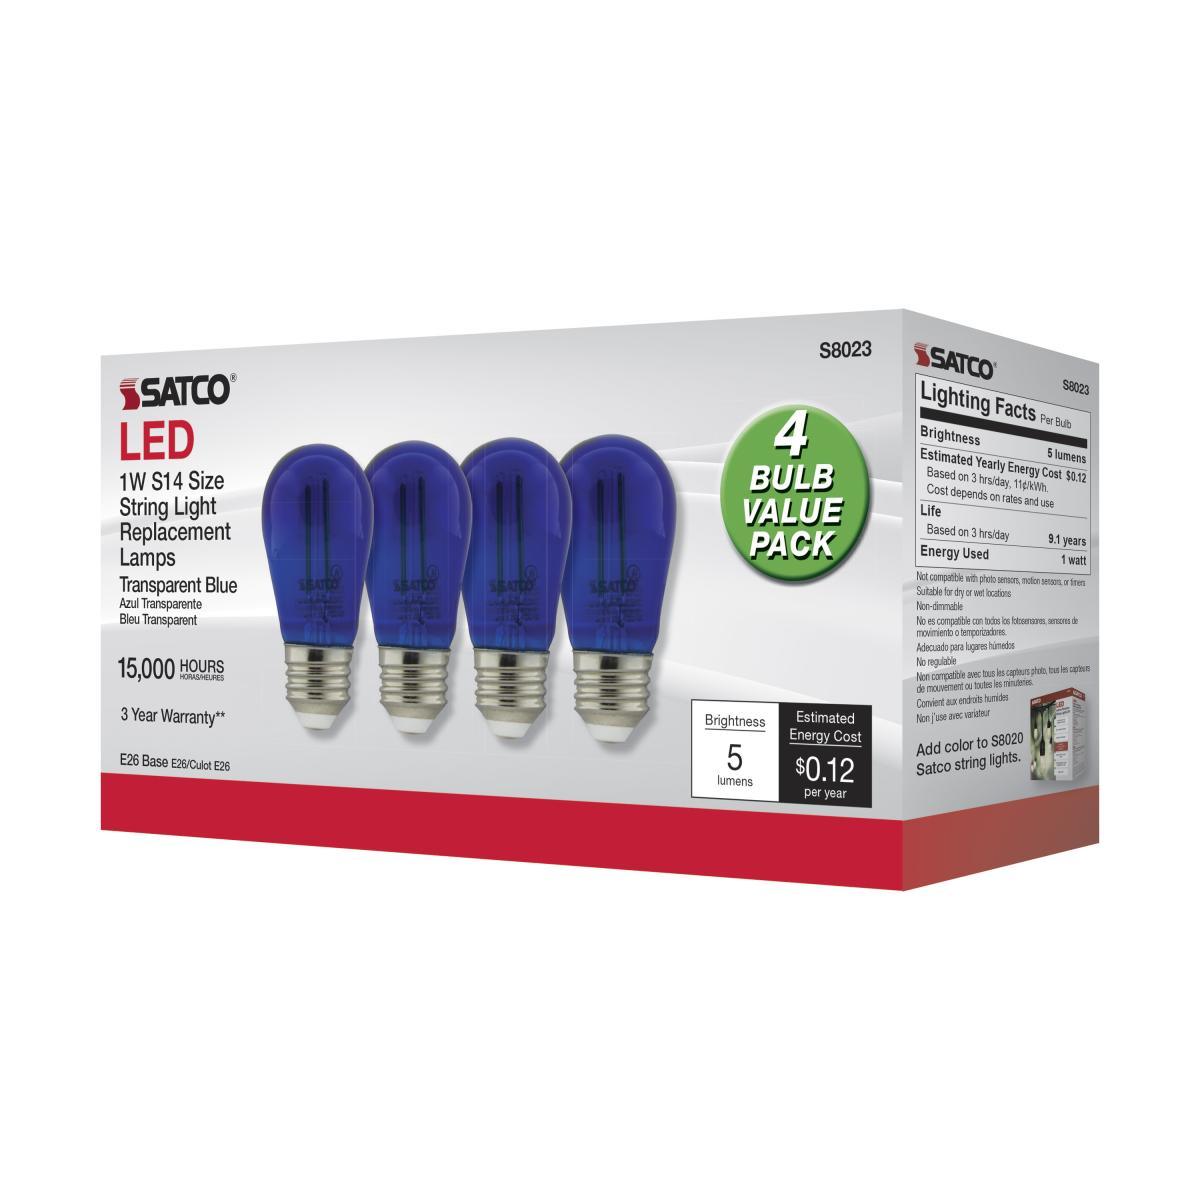 LED S14 Straight Tapered Bulb, 1 Watt, 15 Lumens, Blue, E26 Medium Base, Clear Finish, Pack Of 4